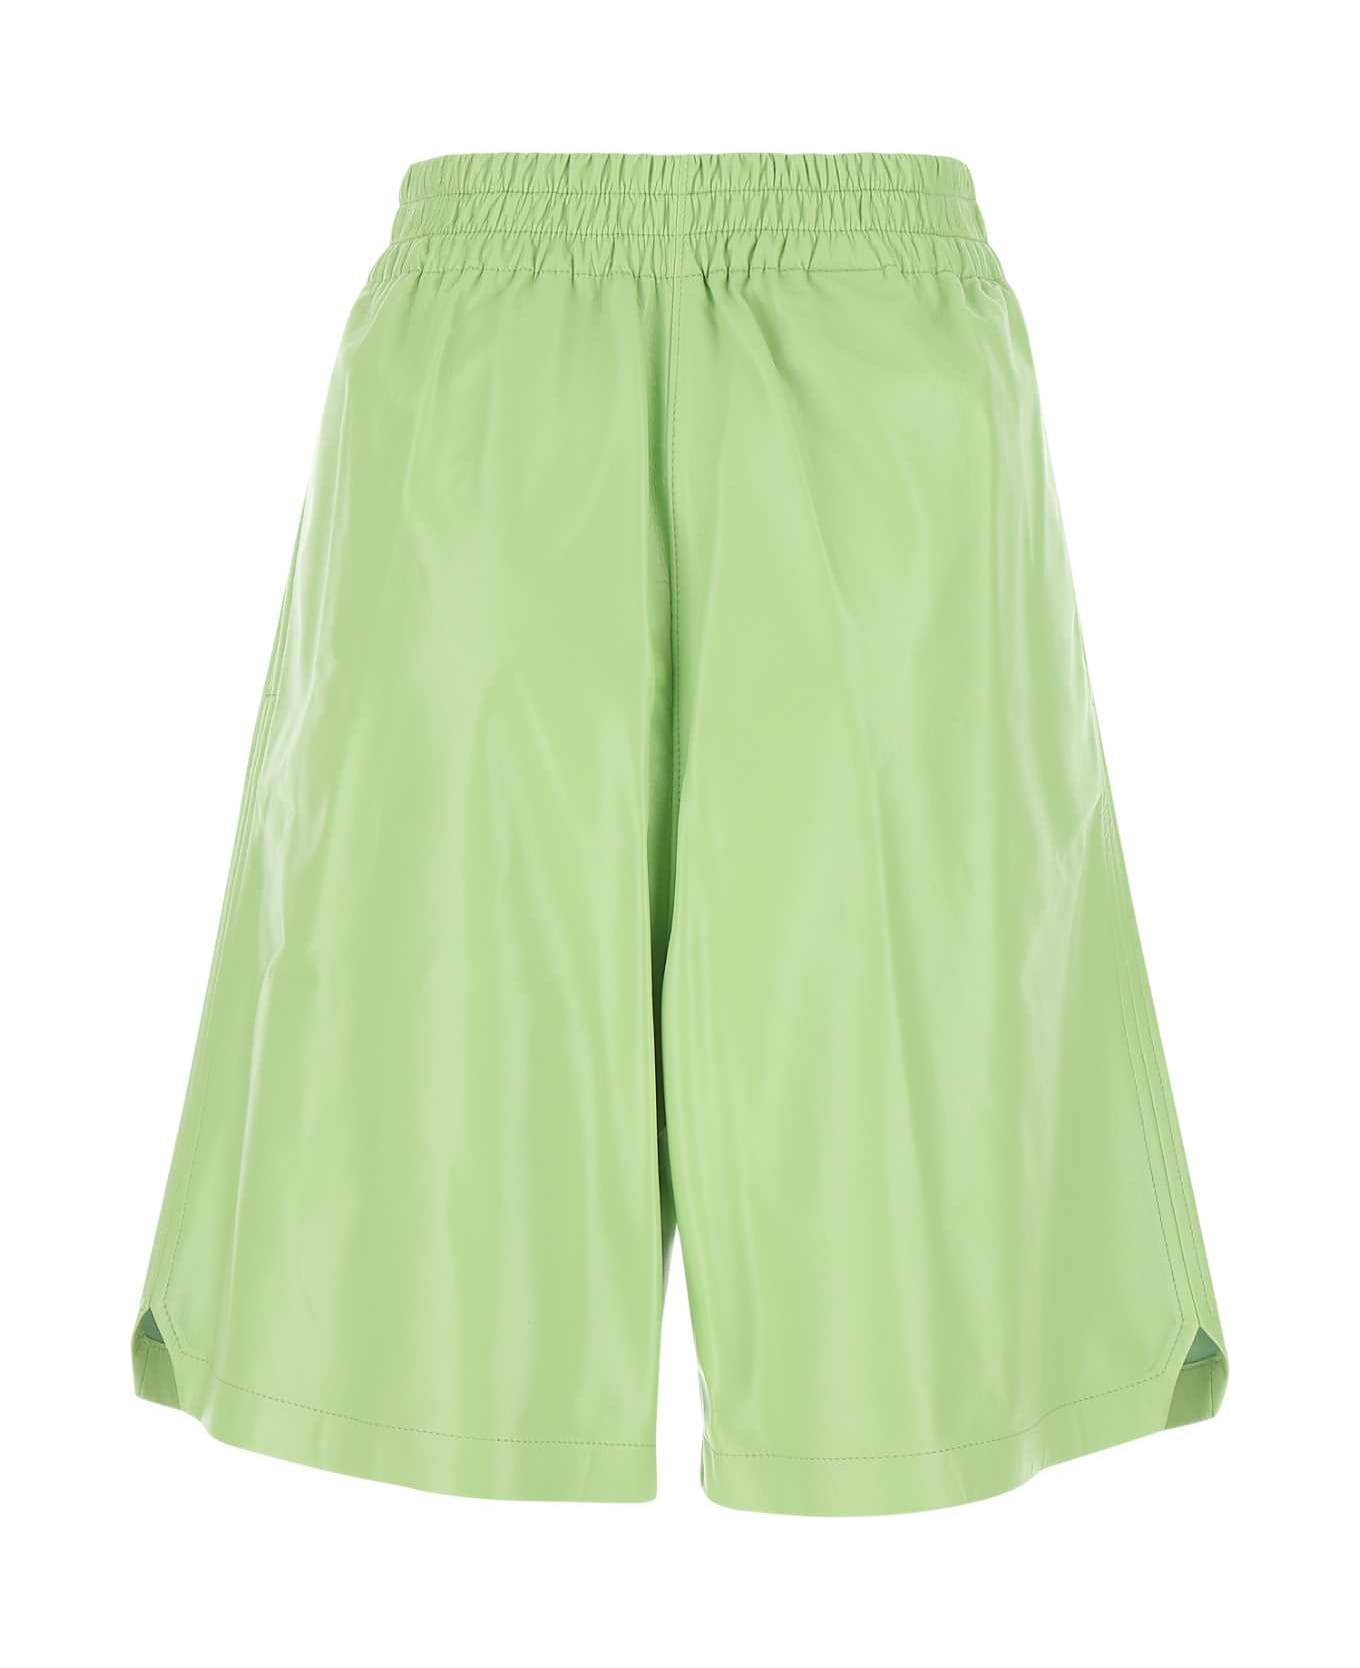 Bottega Veneta Pastel Green Leather Shorts - 3516